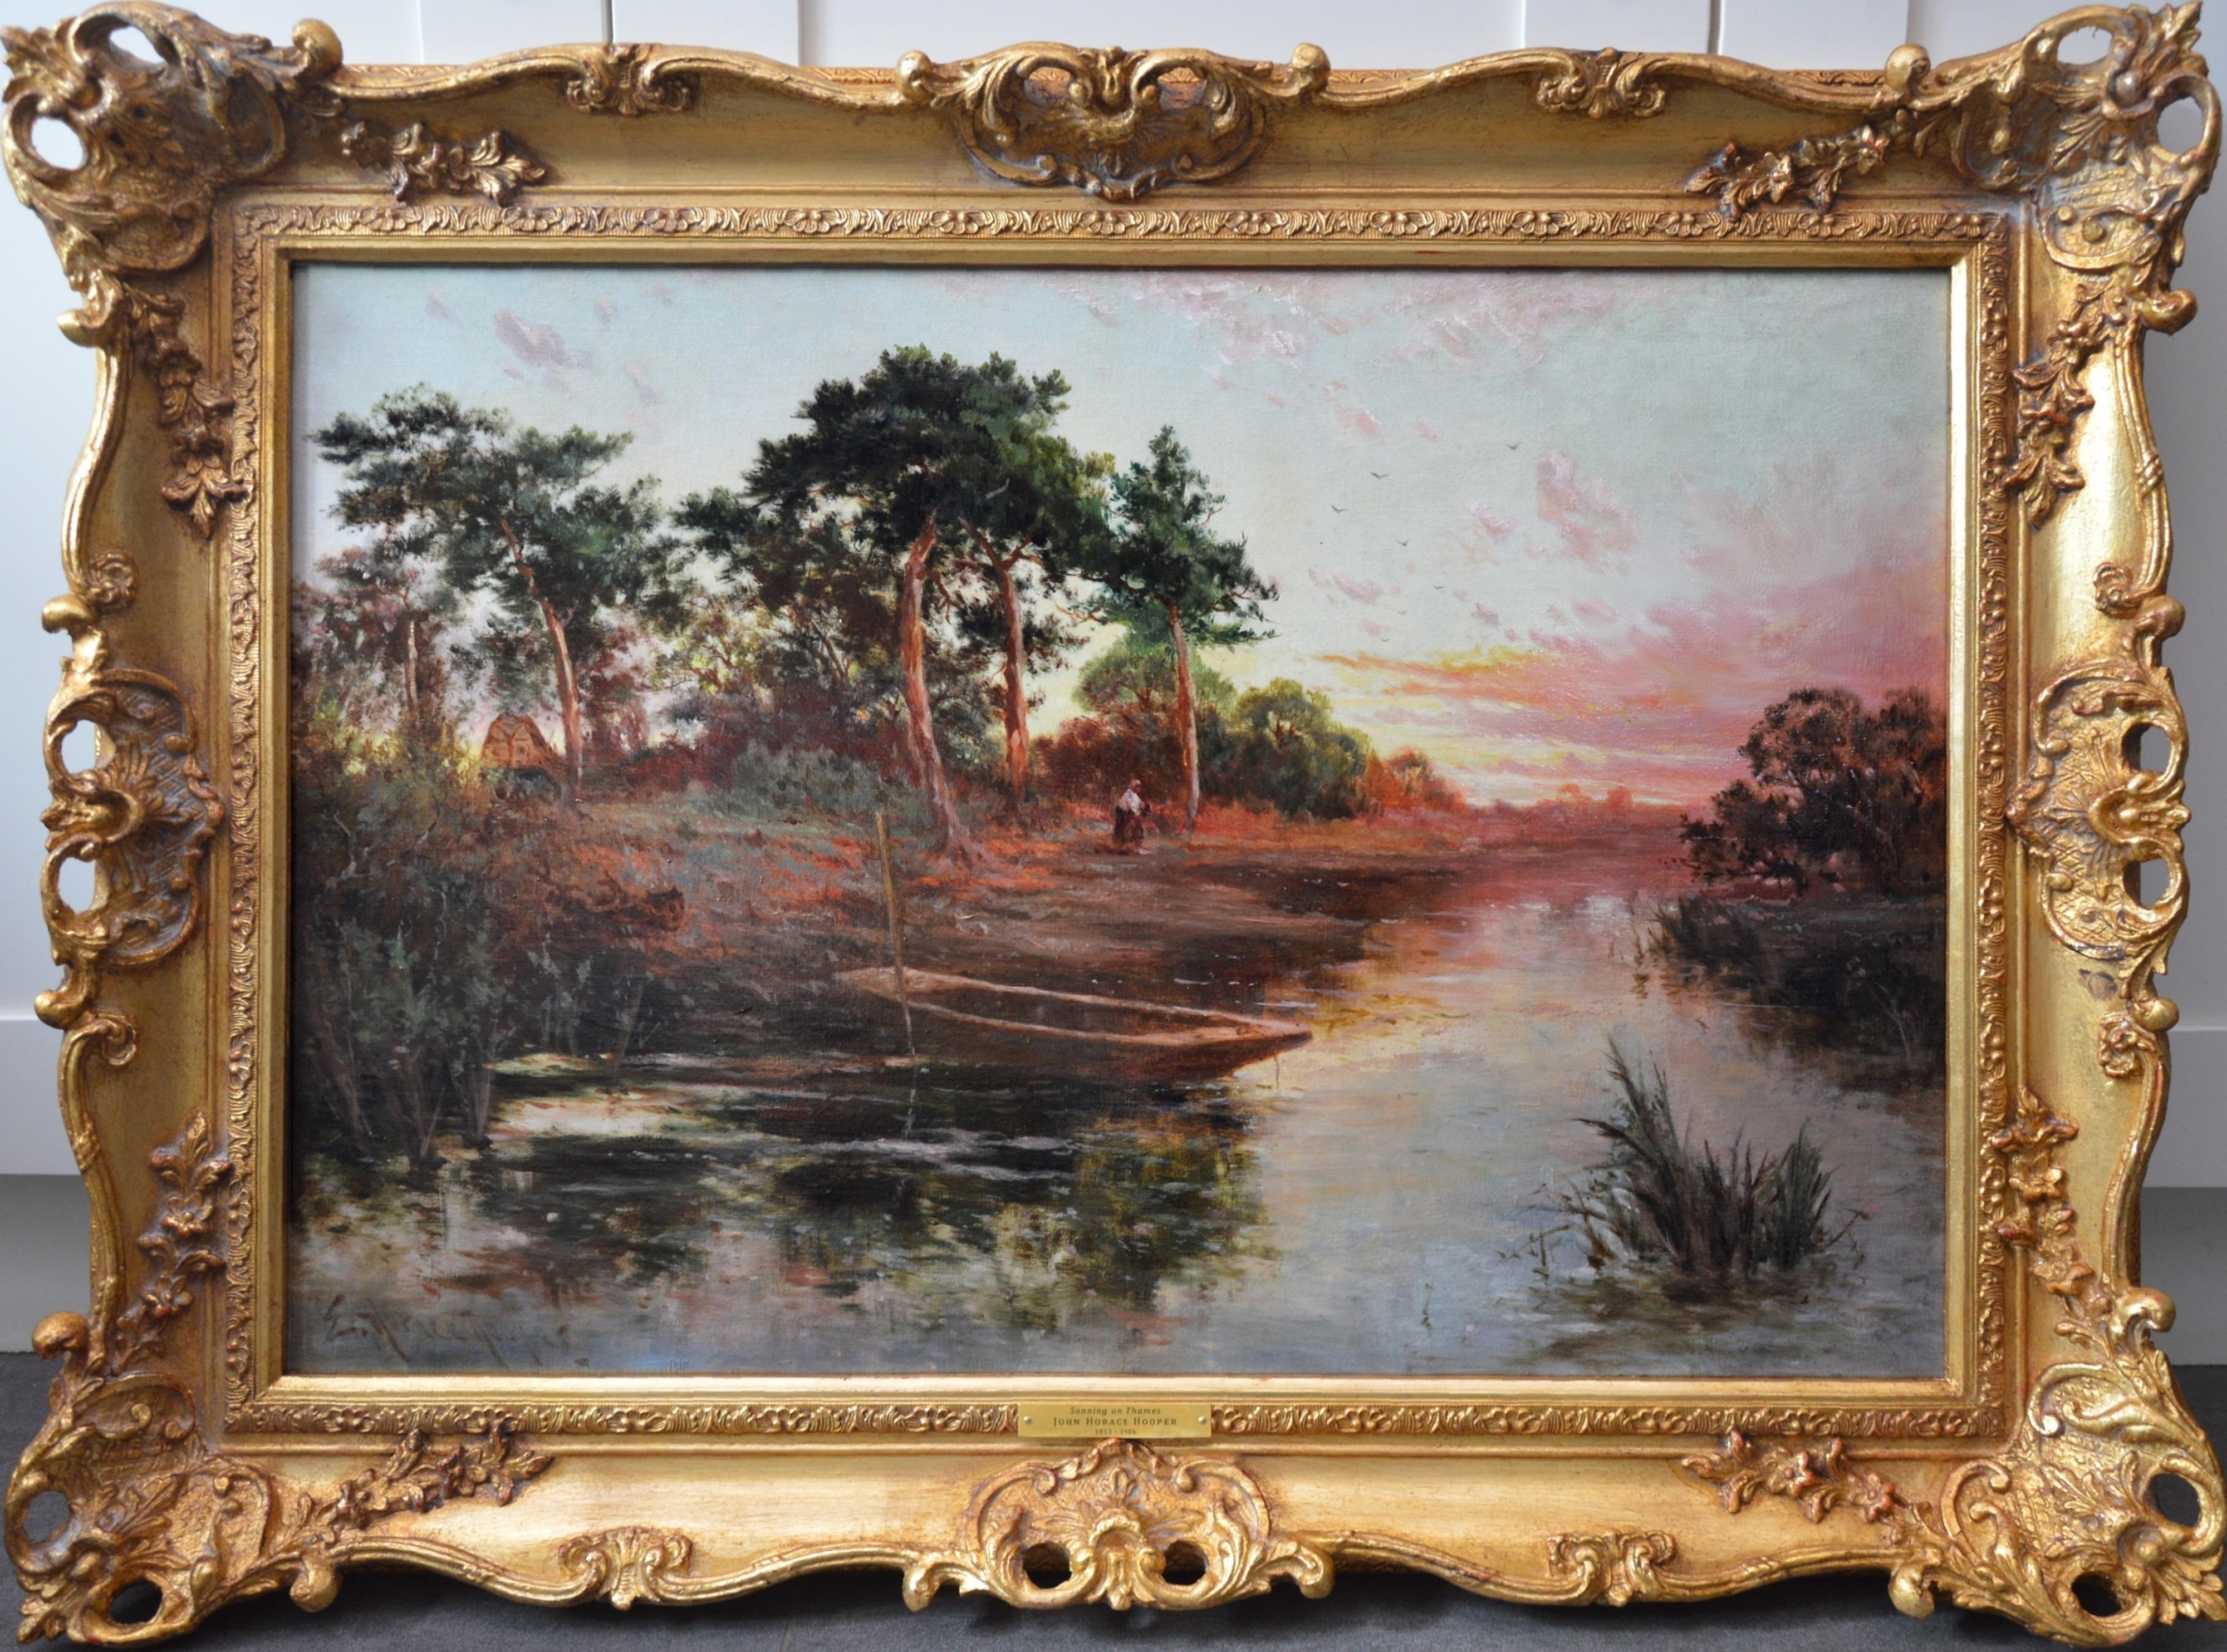 John Horace Hooper Landscape Painting - Sonning on Thames - 19th Century Sunset River Landscape Oil Painting 